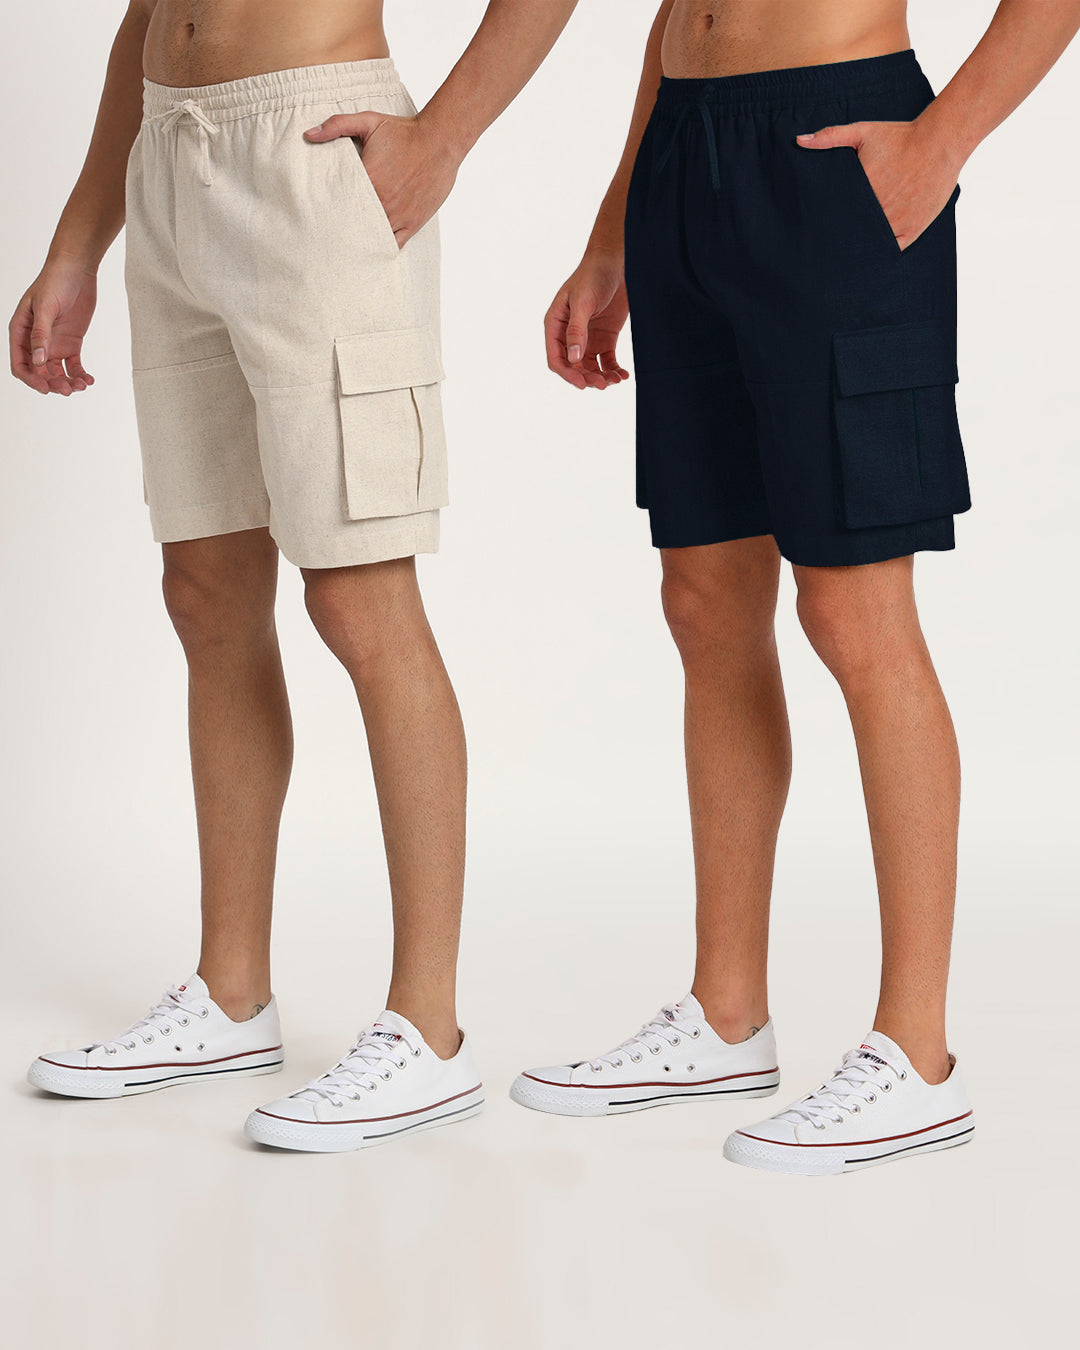 Combo : Slub Comfort Cargo Shorts Beige & Midnight Bue Men's Shorts